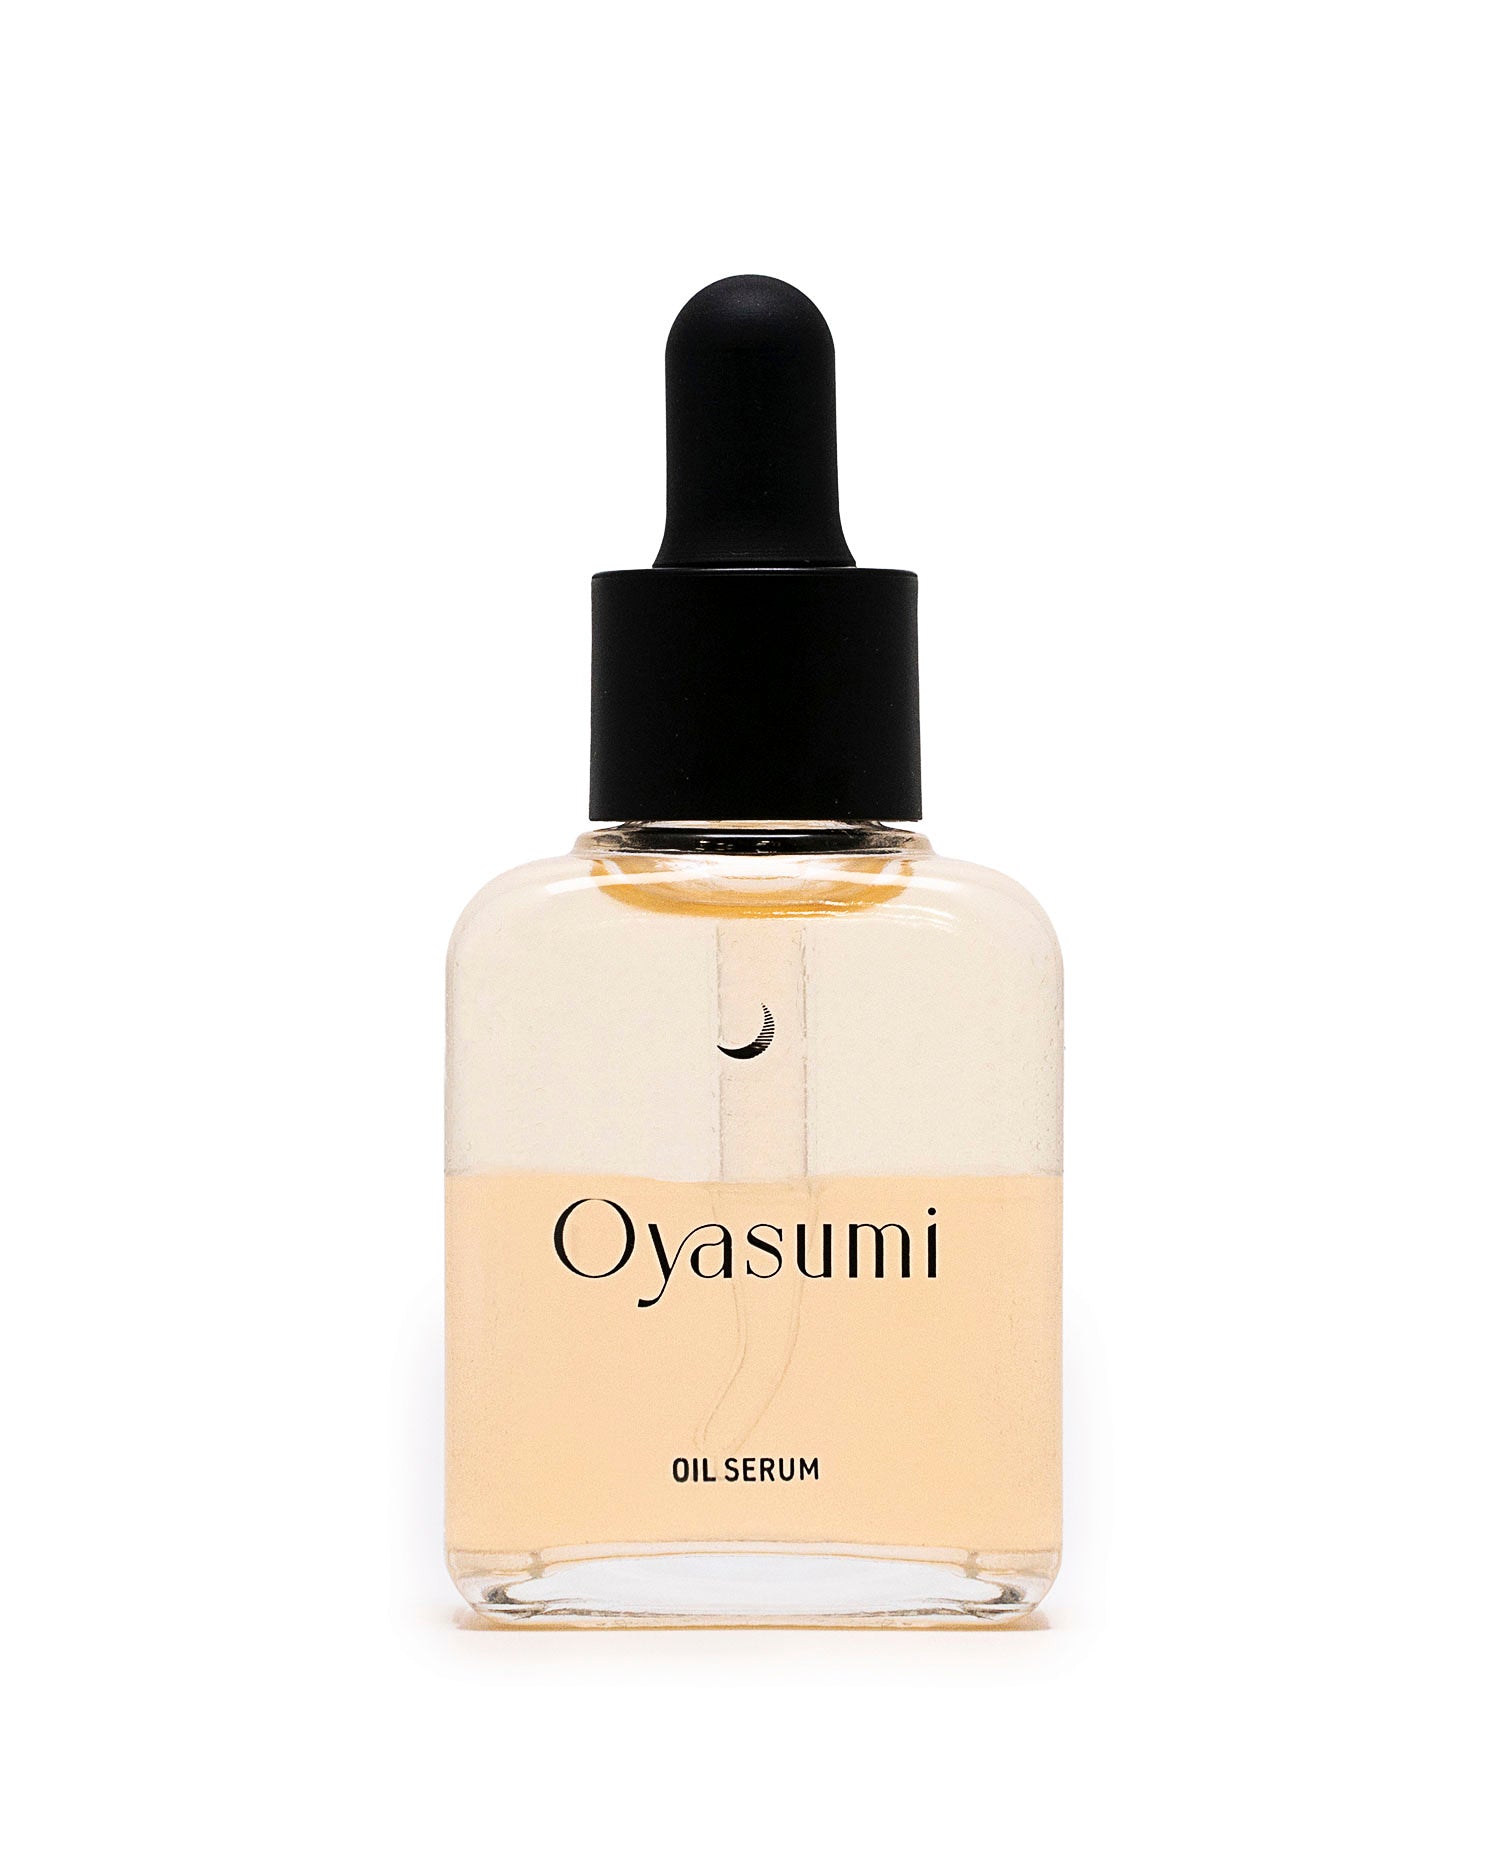 Oyasumi Oil Serum – AMARC LIFE STORE